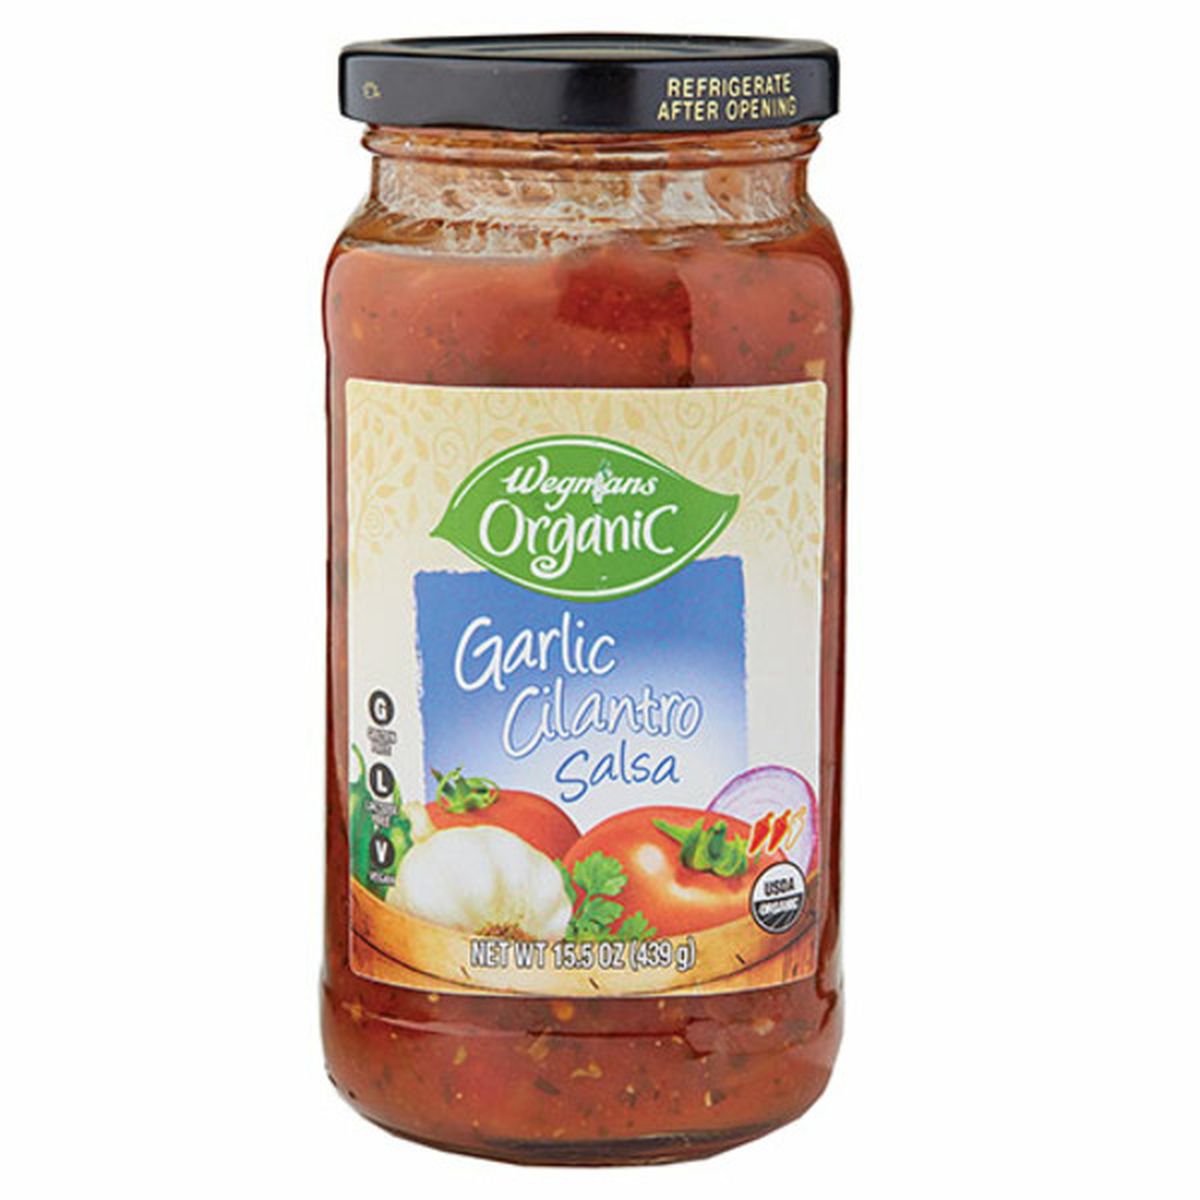 Calories in Wegmans Organic Garlic Cilantro Salsa